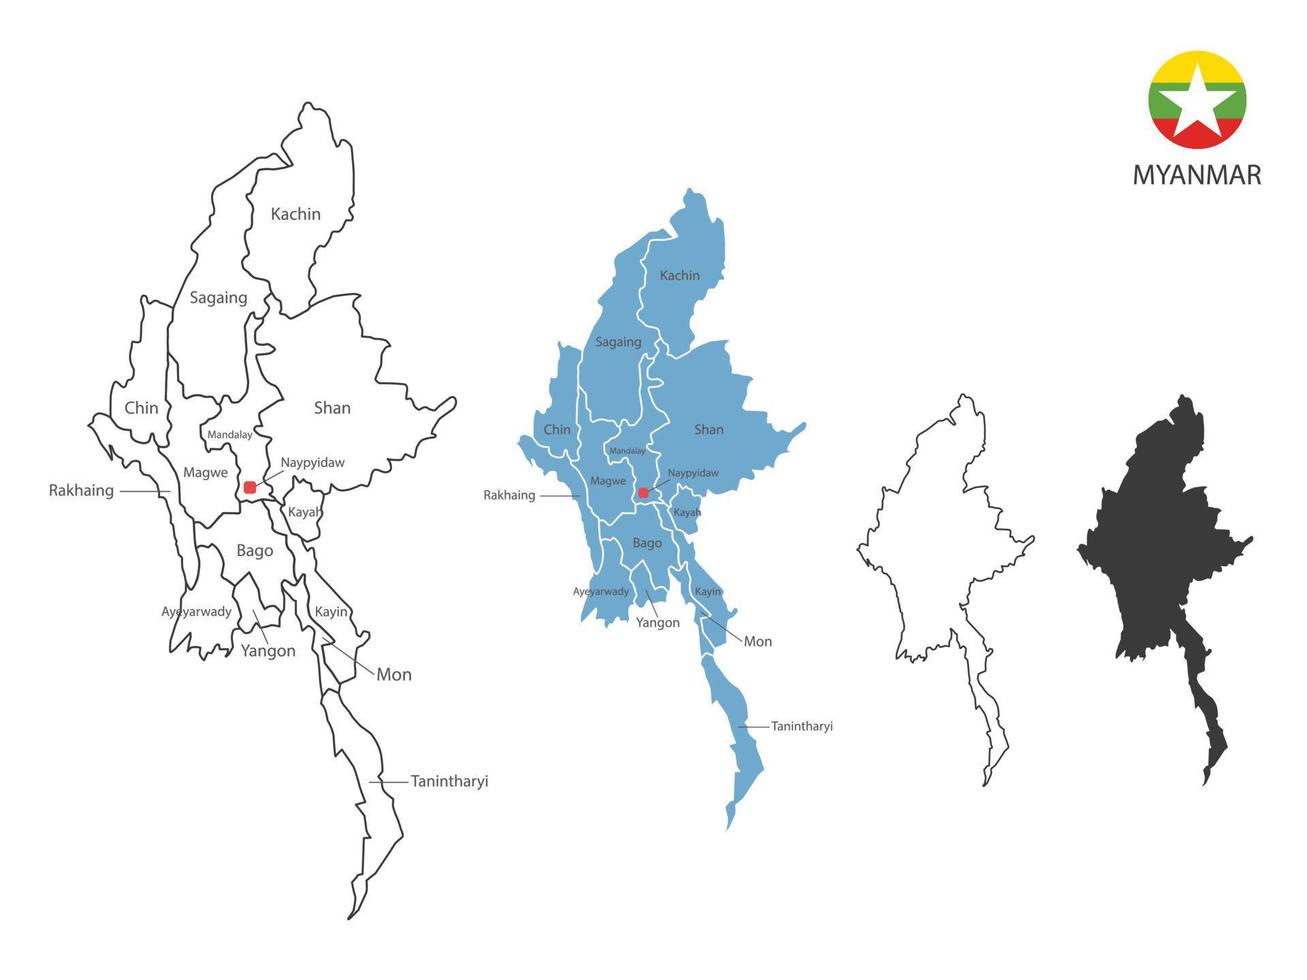 4 estilo de ilustração vetorial de mapa de mianmar têm todas as províncias e marcam a capital de mianmar. pelo estilo de simplicidade de contorno preto fino e estilo de sombra escura. isolado no fundo branco. vetor